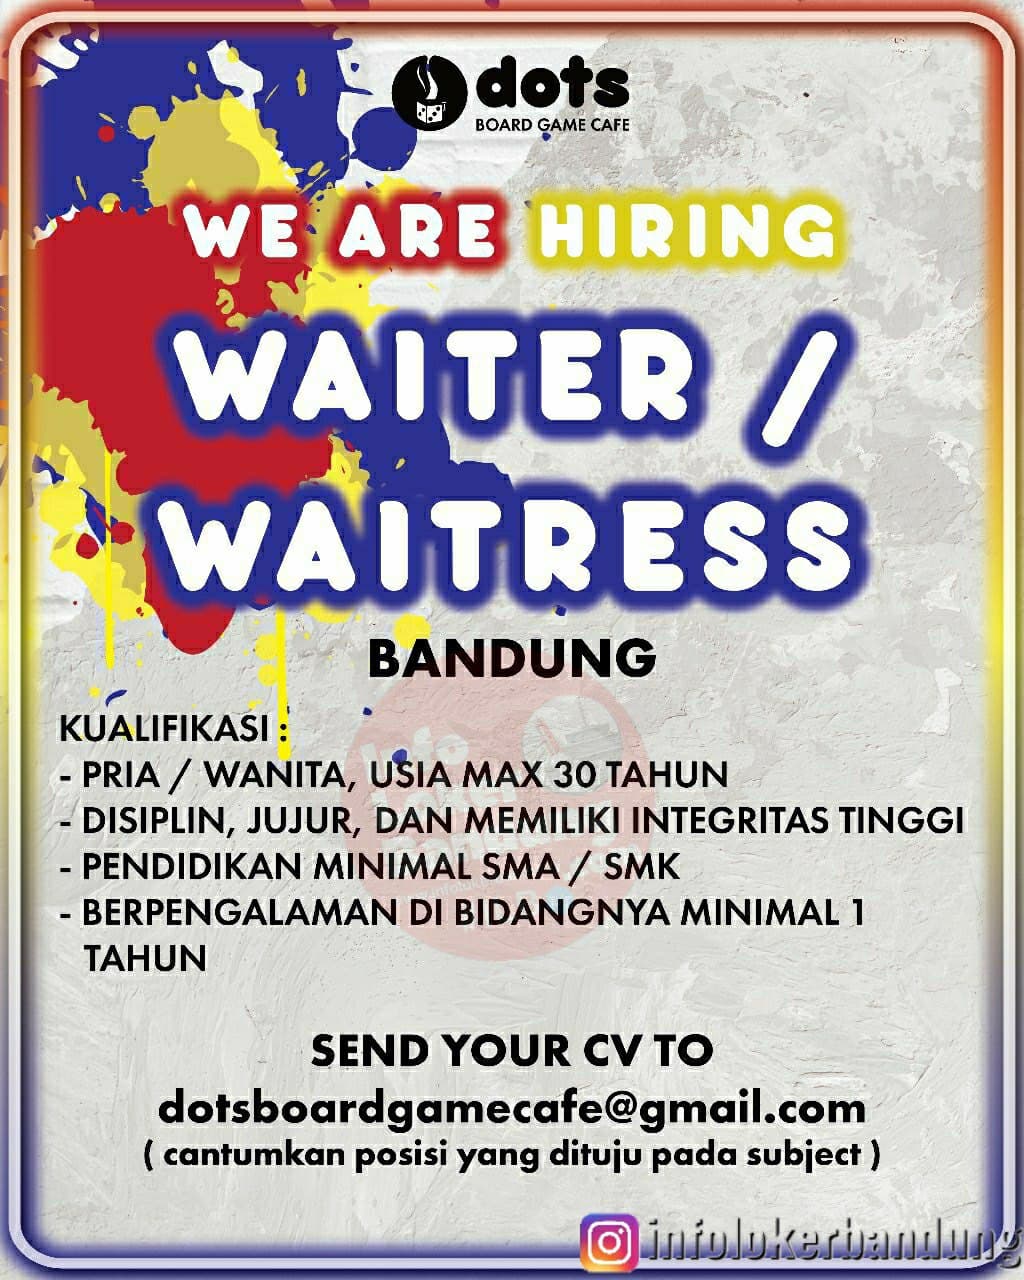 Lowongan Kerja Waiter / Waitress DOTS Board Game Cafe Bandung Januari 2021